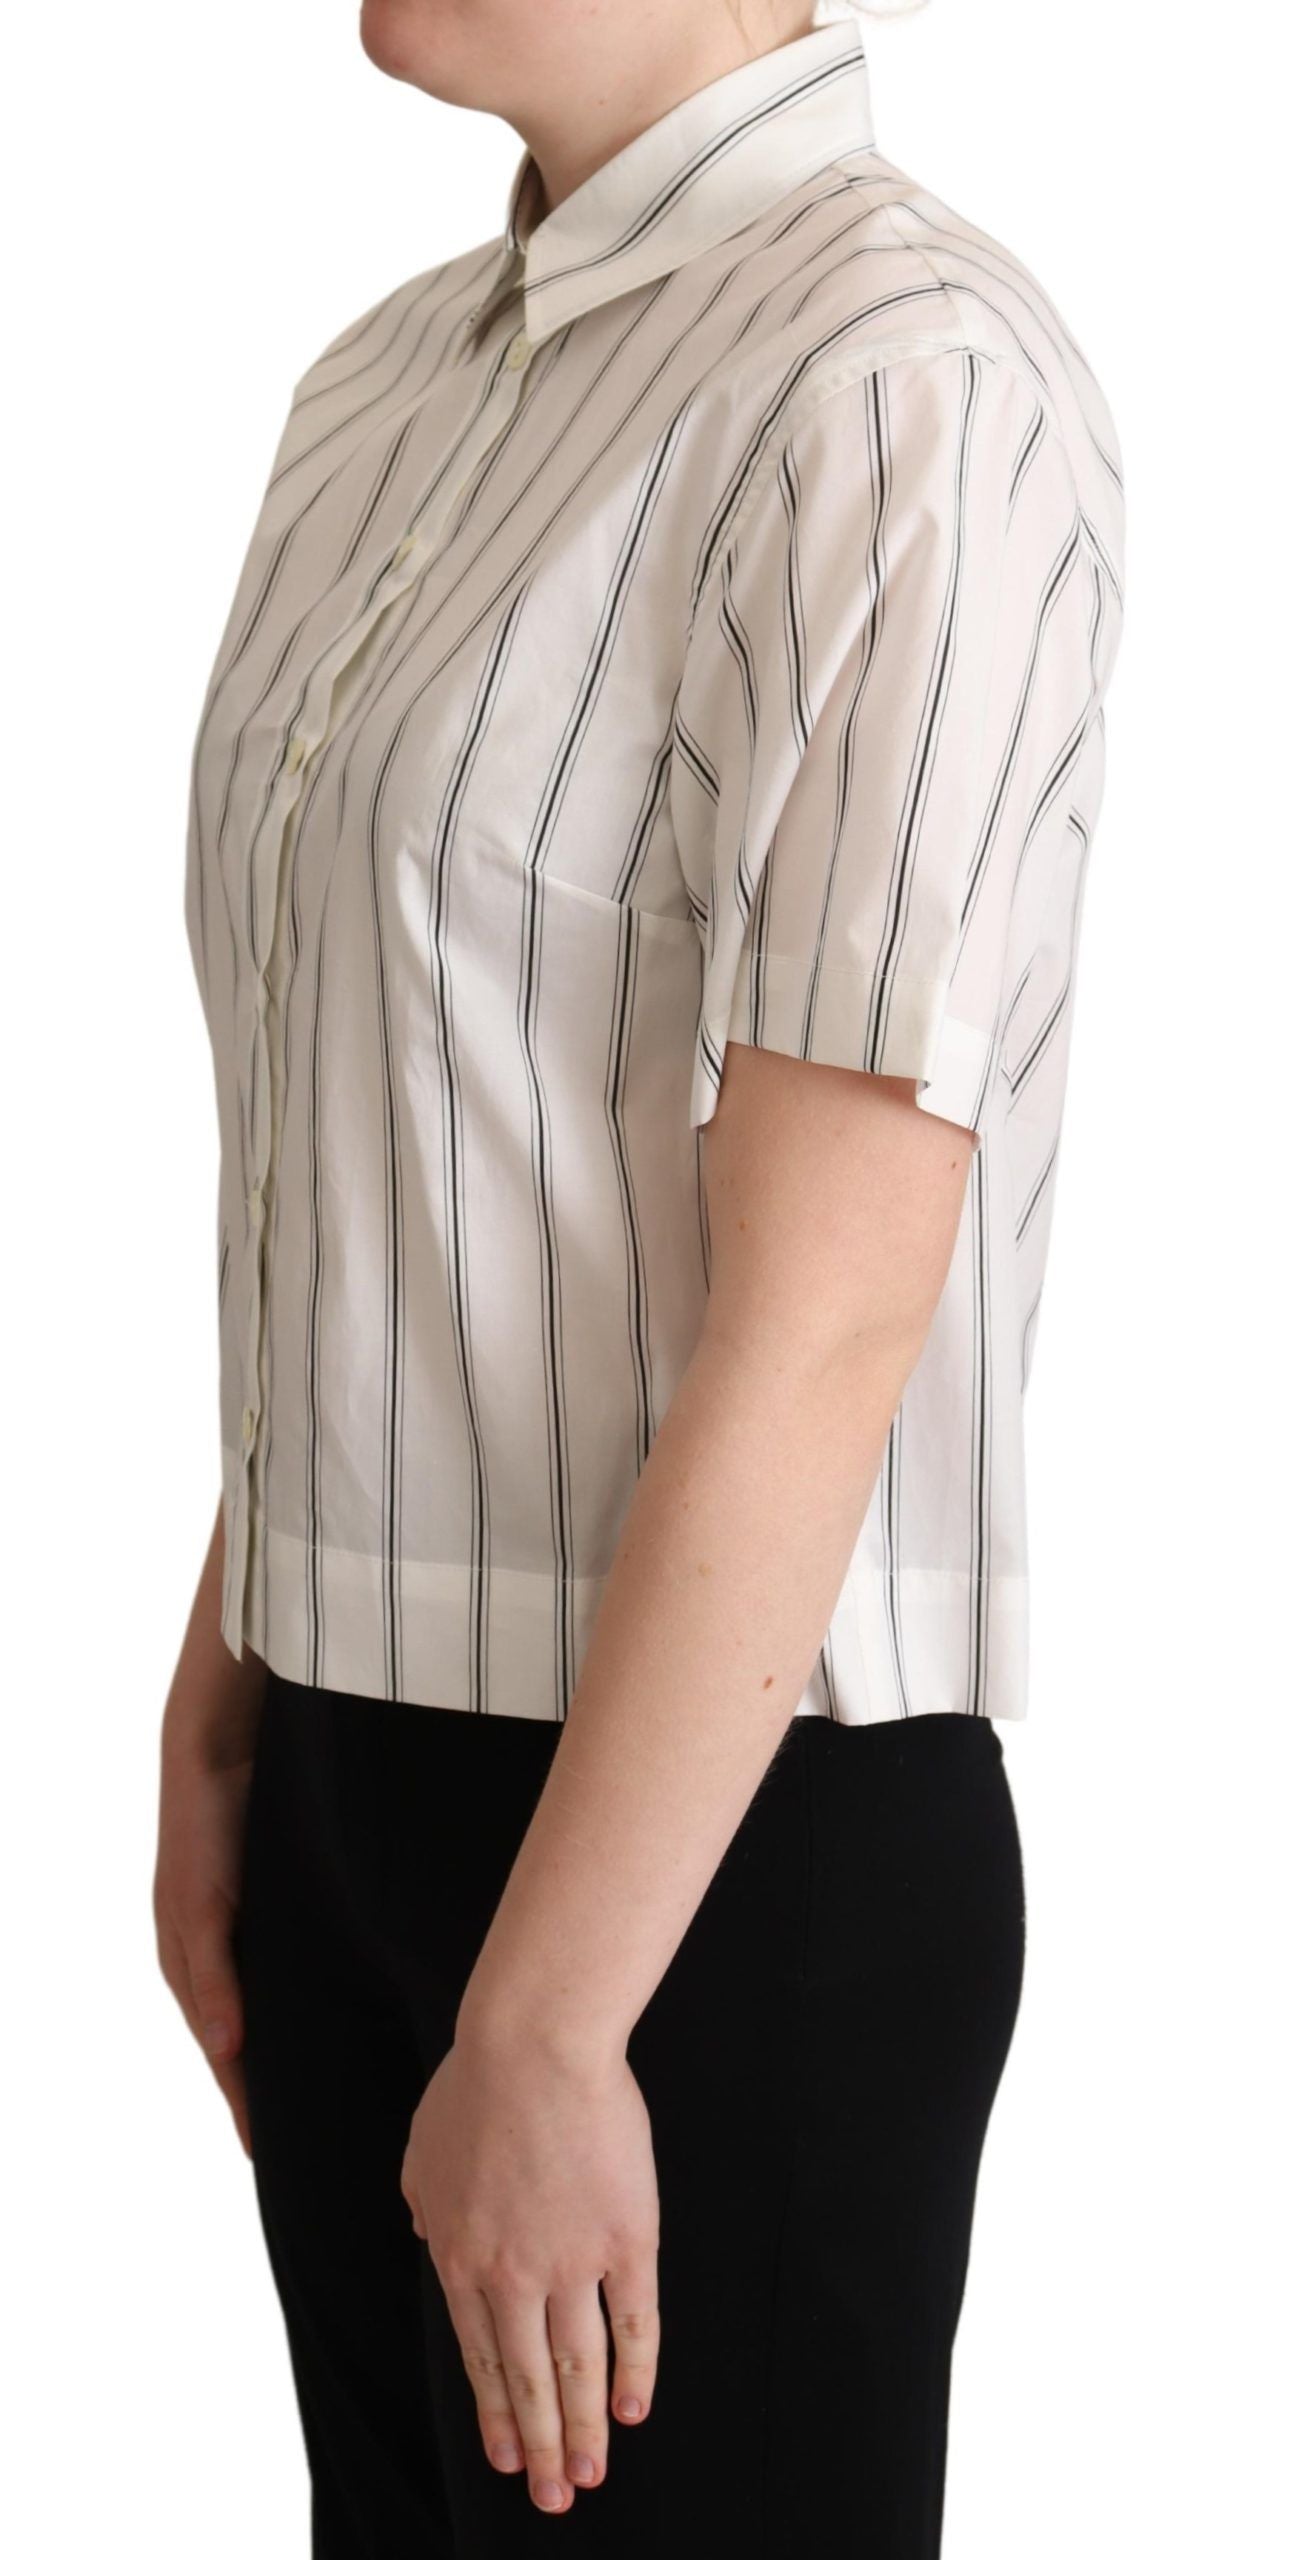 White Black Stripes Collared Shirt Top